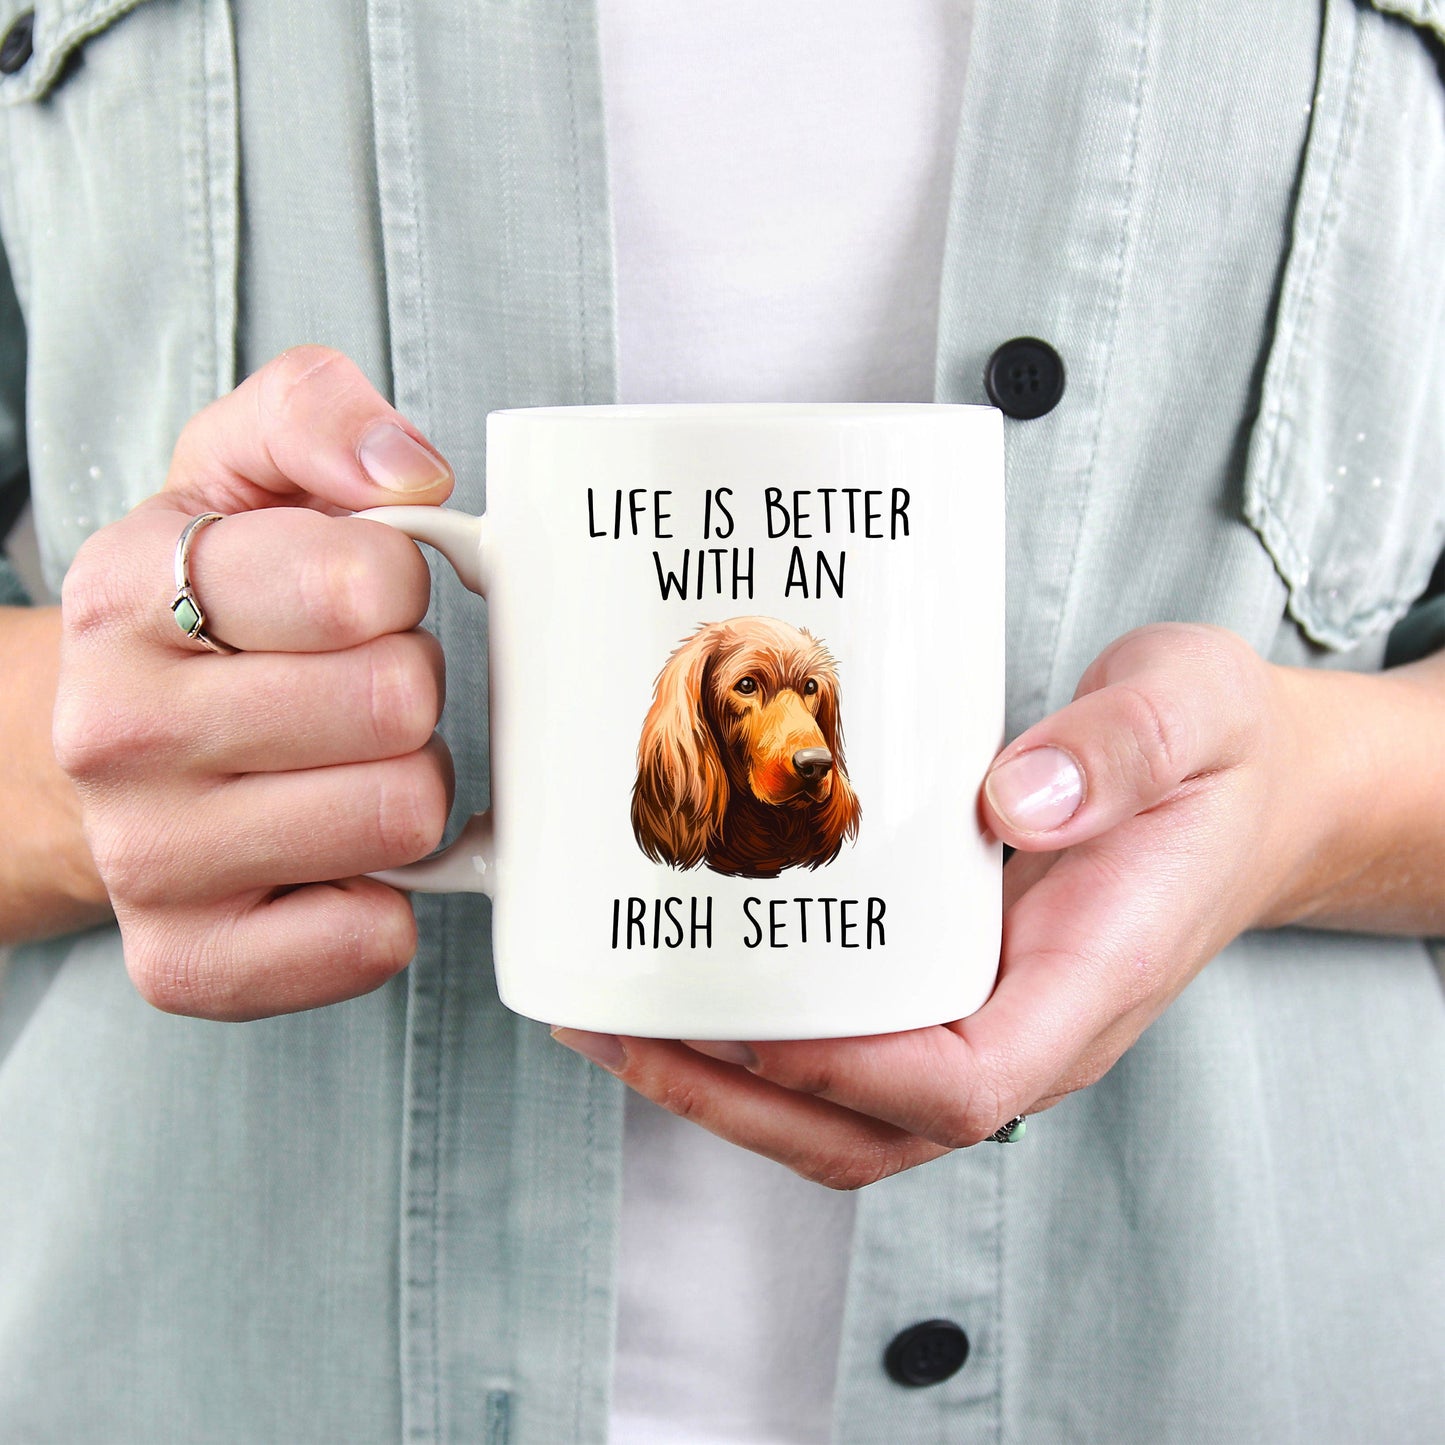 Life is Better with an Irish Setter Dog Ceramic Coffee Mug